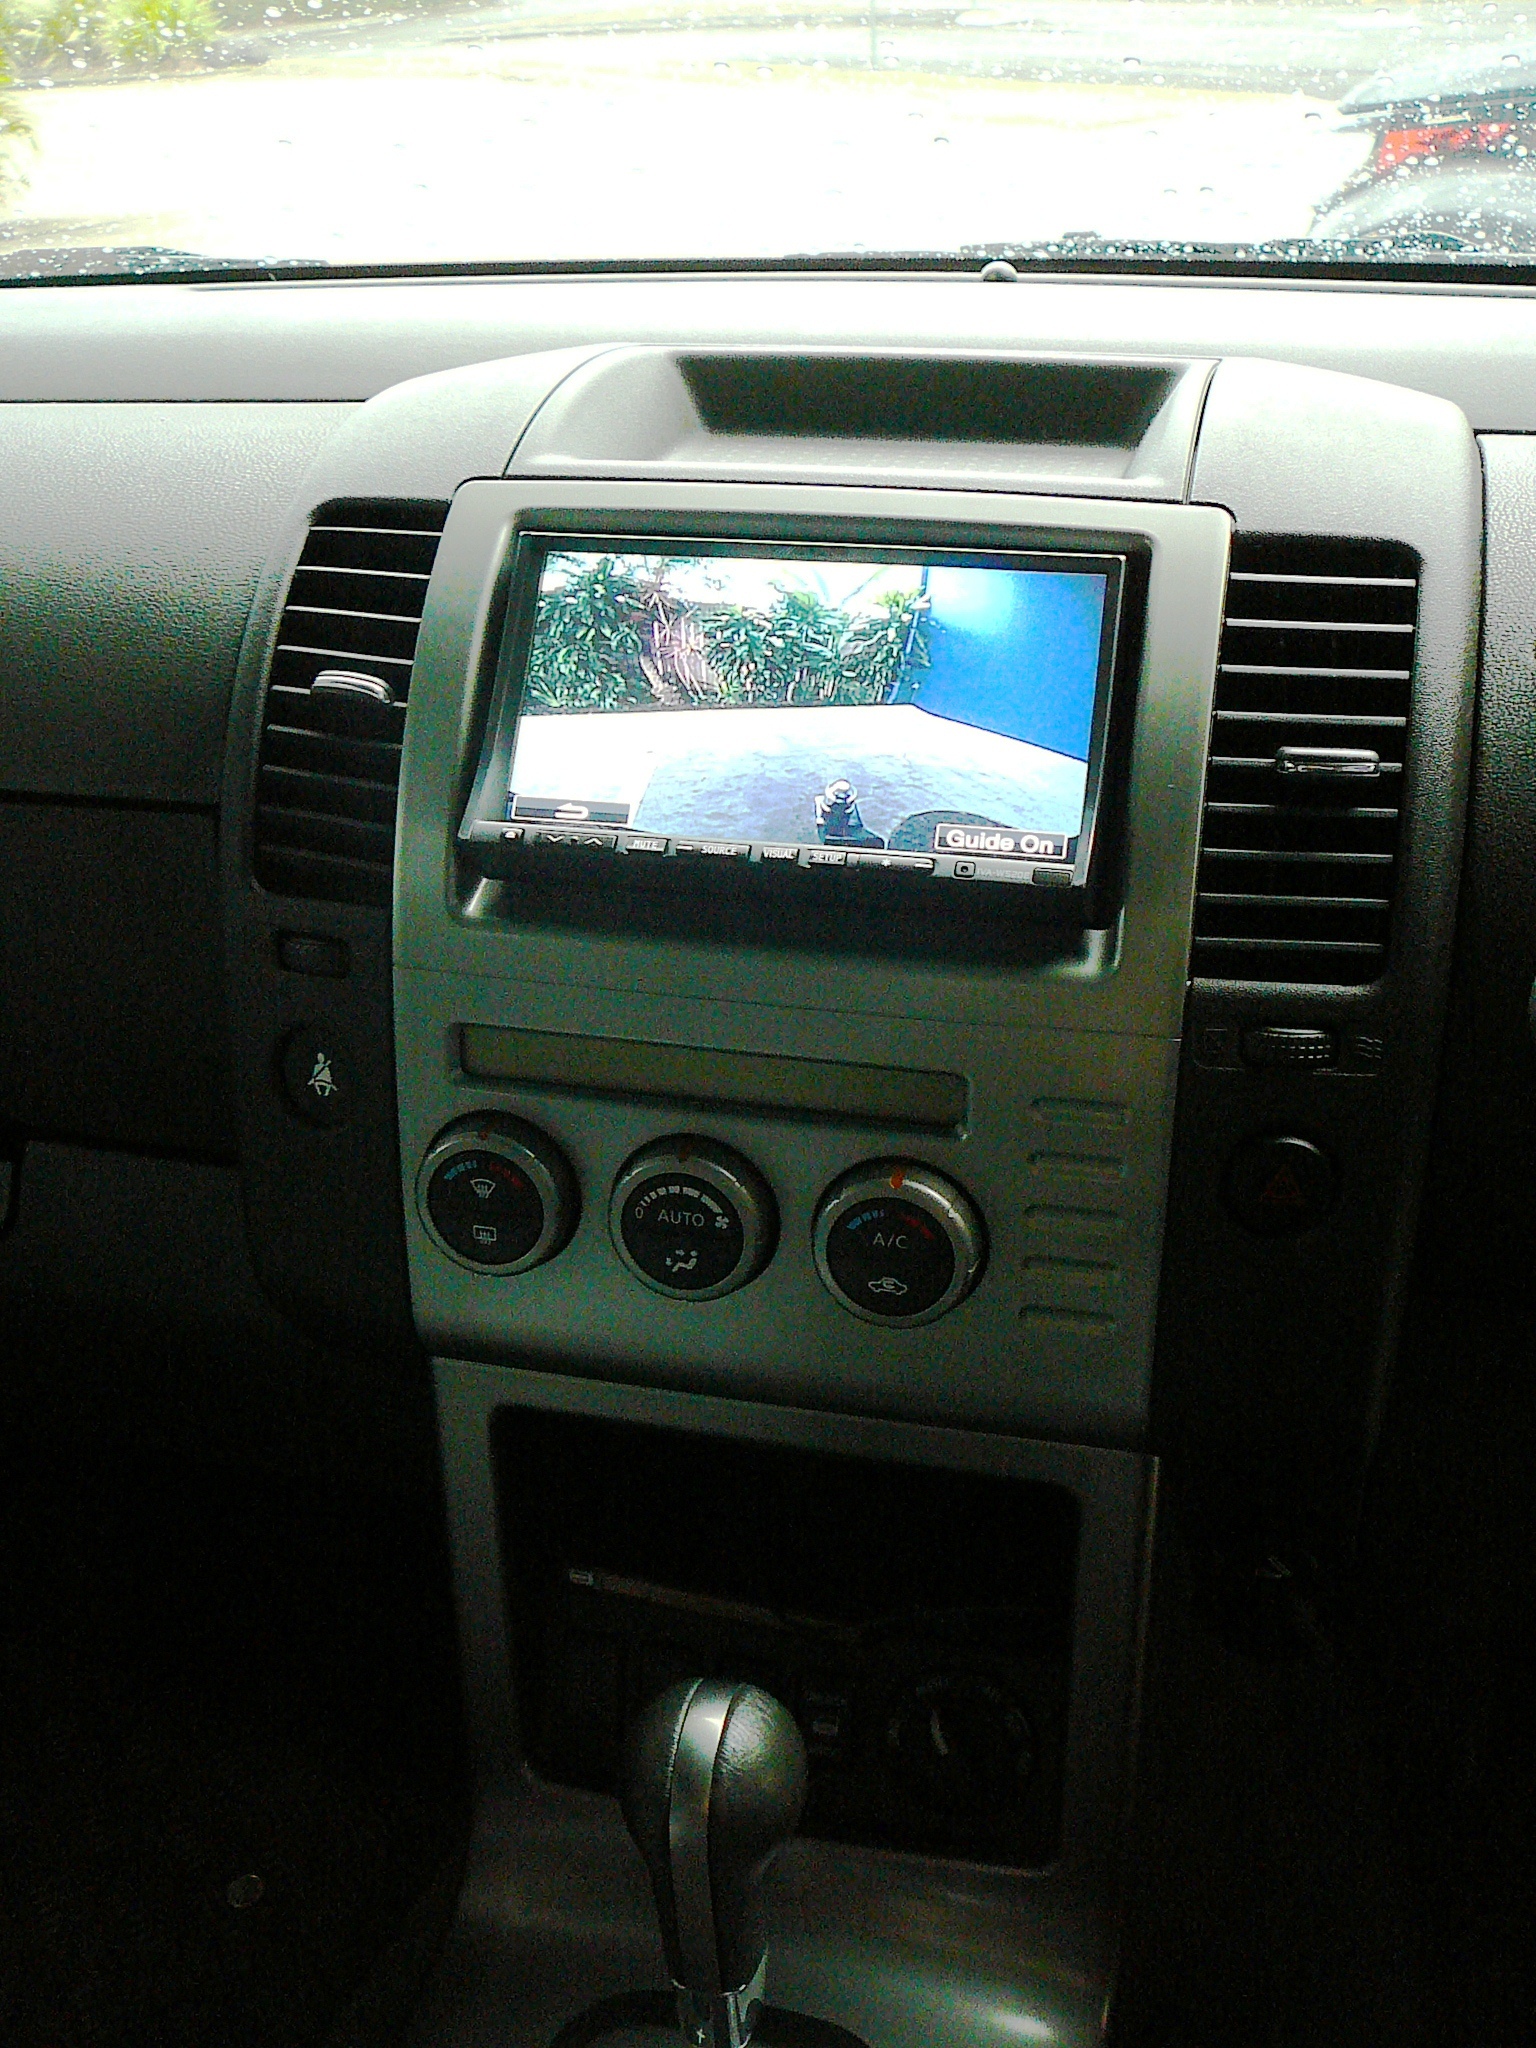 Nissan Pathfinder 2007, Alpine AV unit and reverse camera